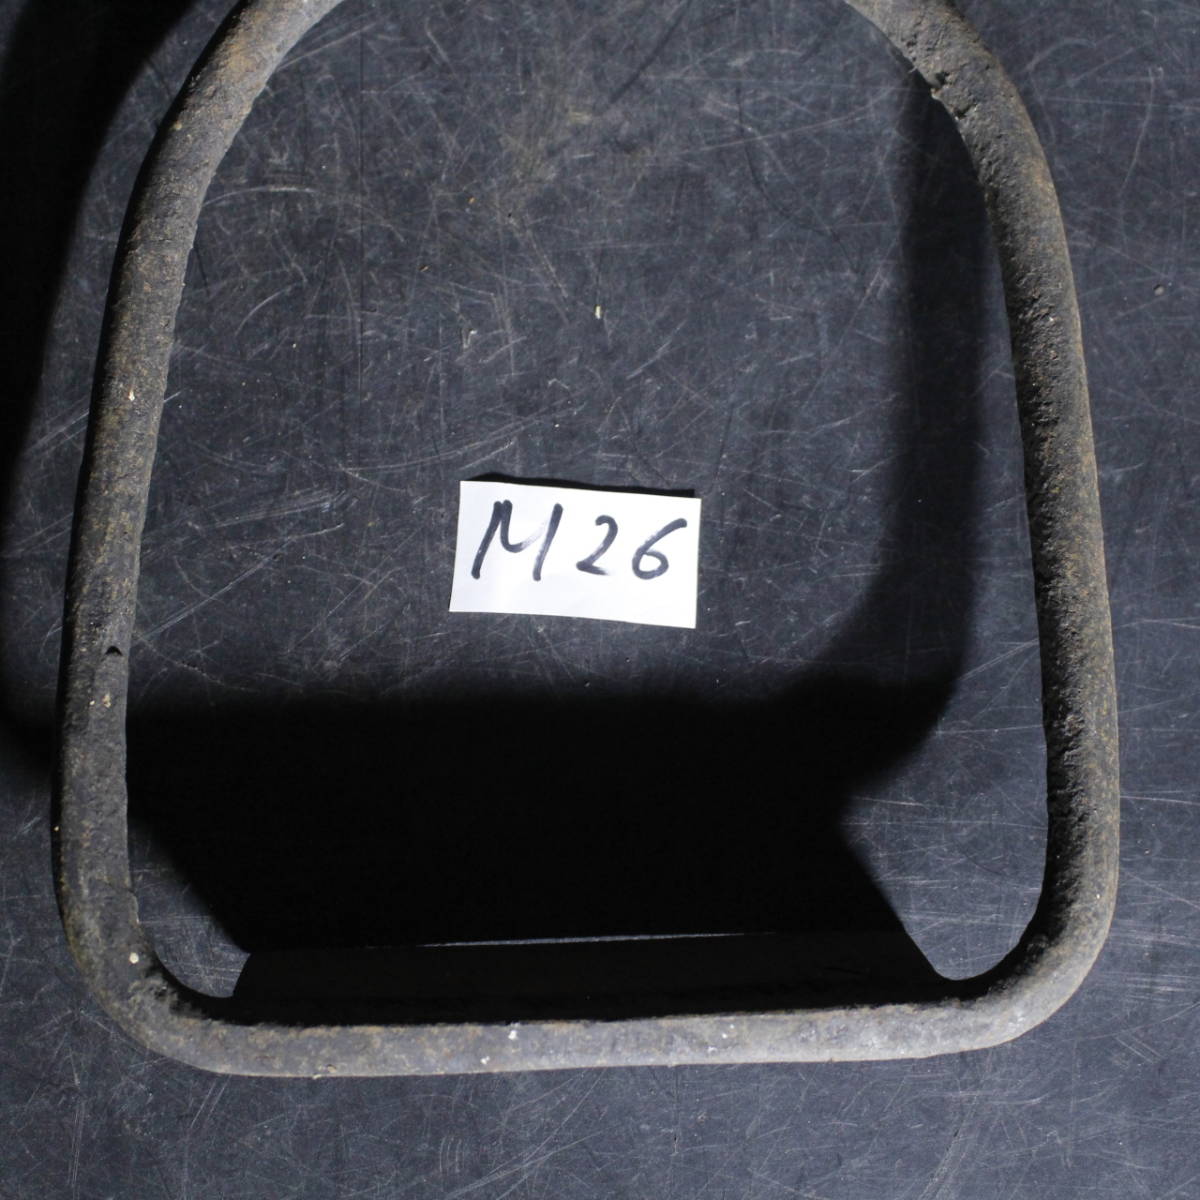 M26 iron stirrups harness ... one leg only 